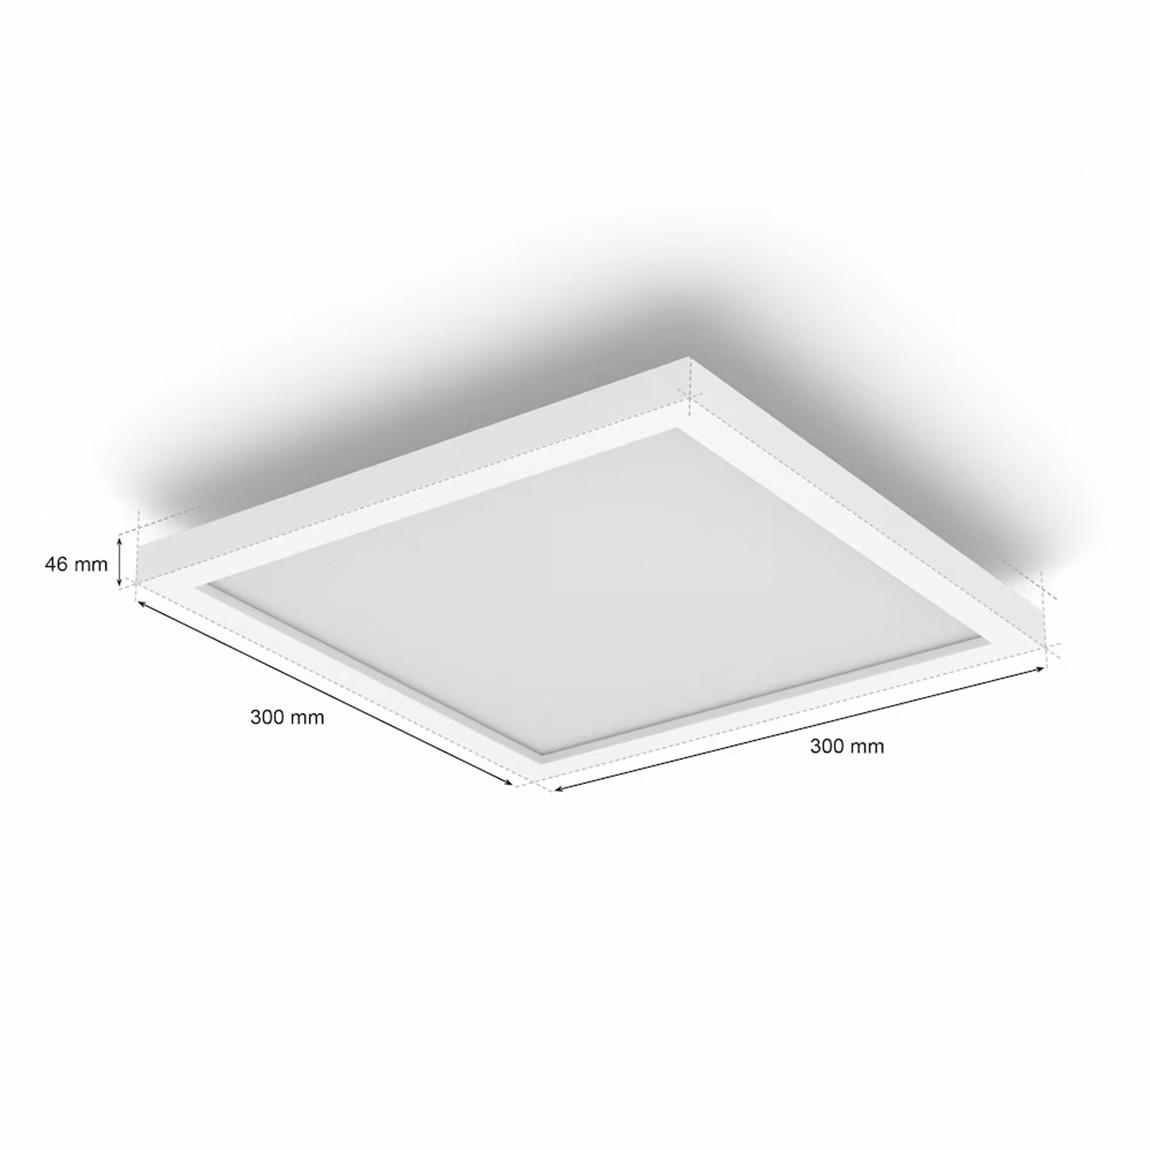 Philips Hue White & Color Ambiance Surimu Panelleuchte 30x30cm - Weiß_Maße